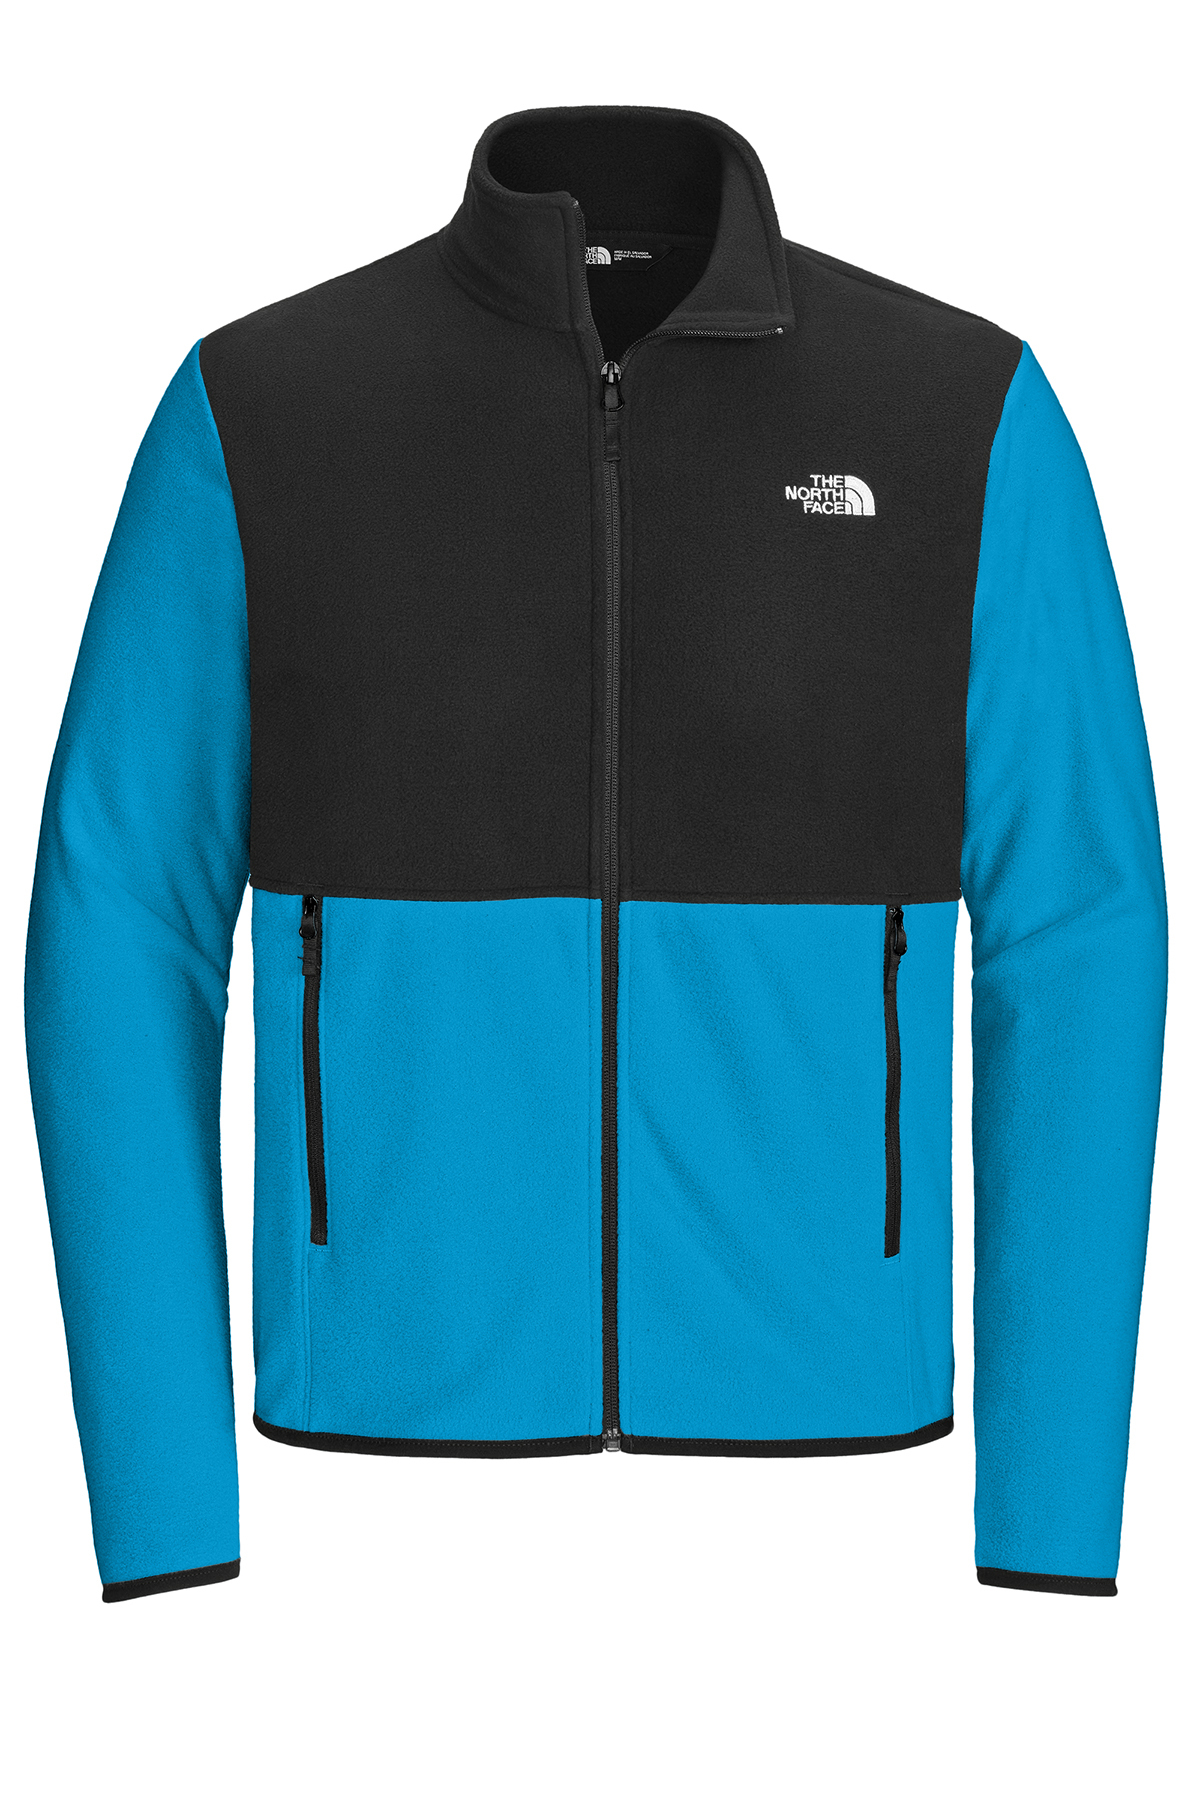 The Jacket | Full-Zip Face Fleece Glacier Product SanMar | North